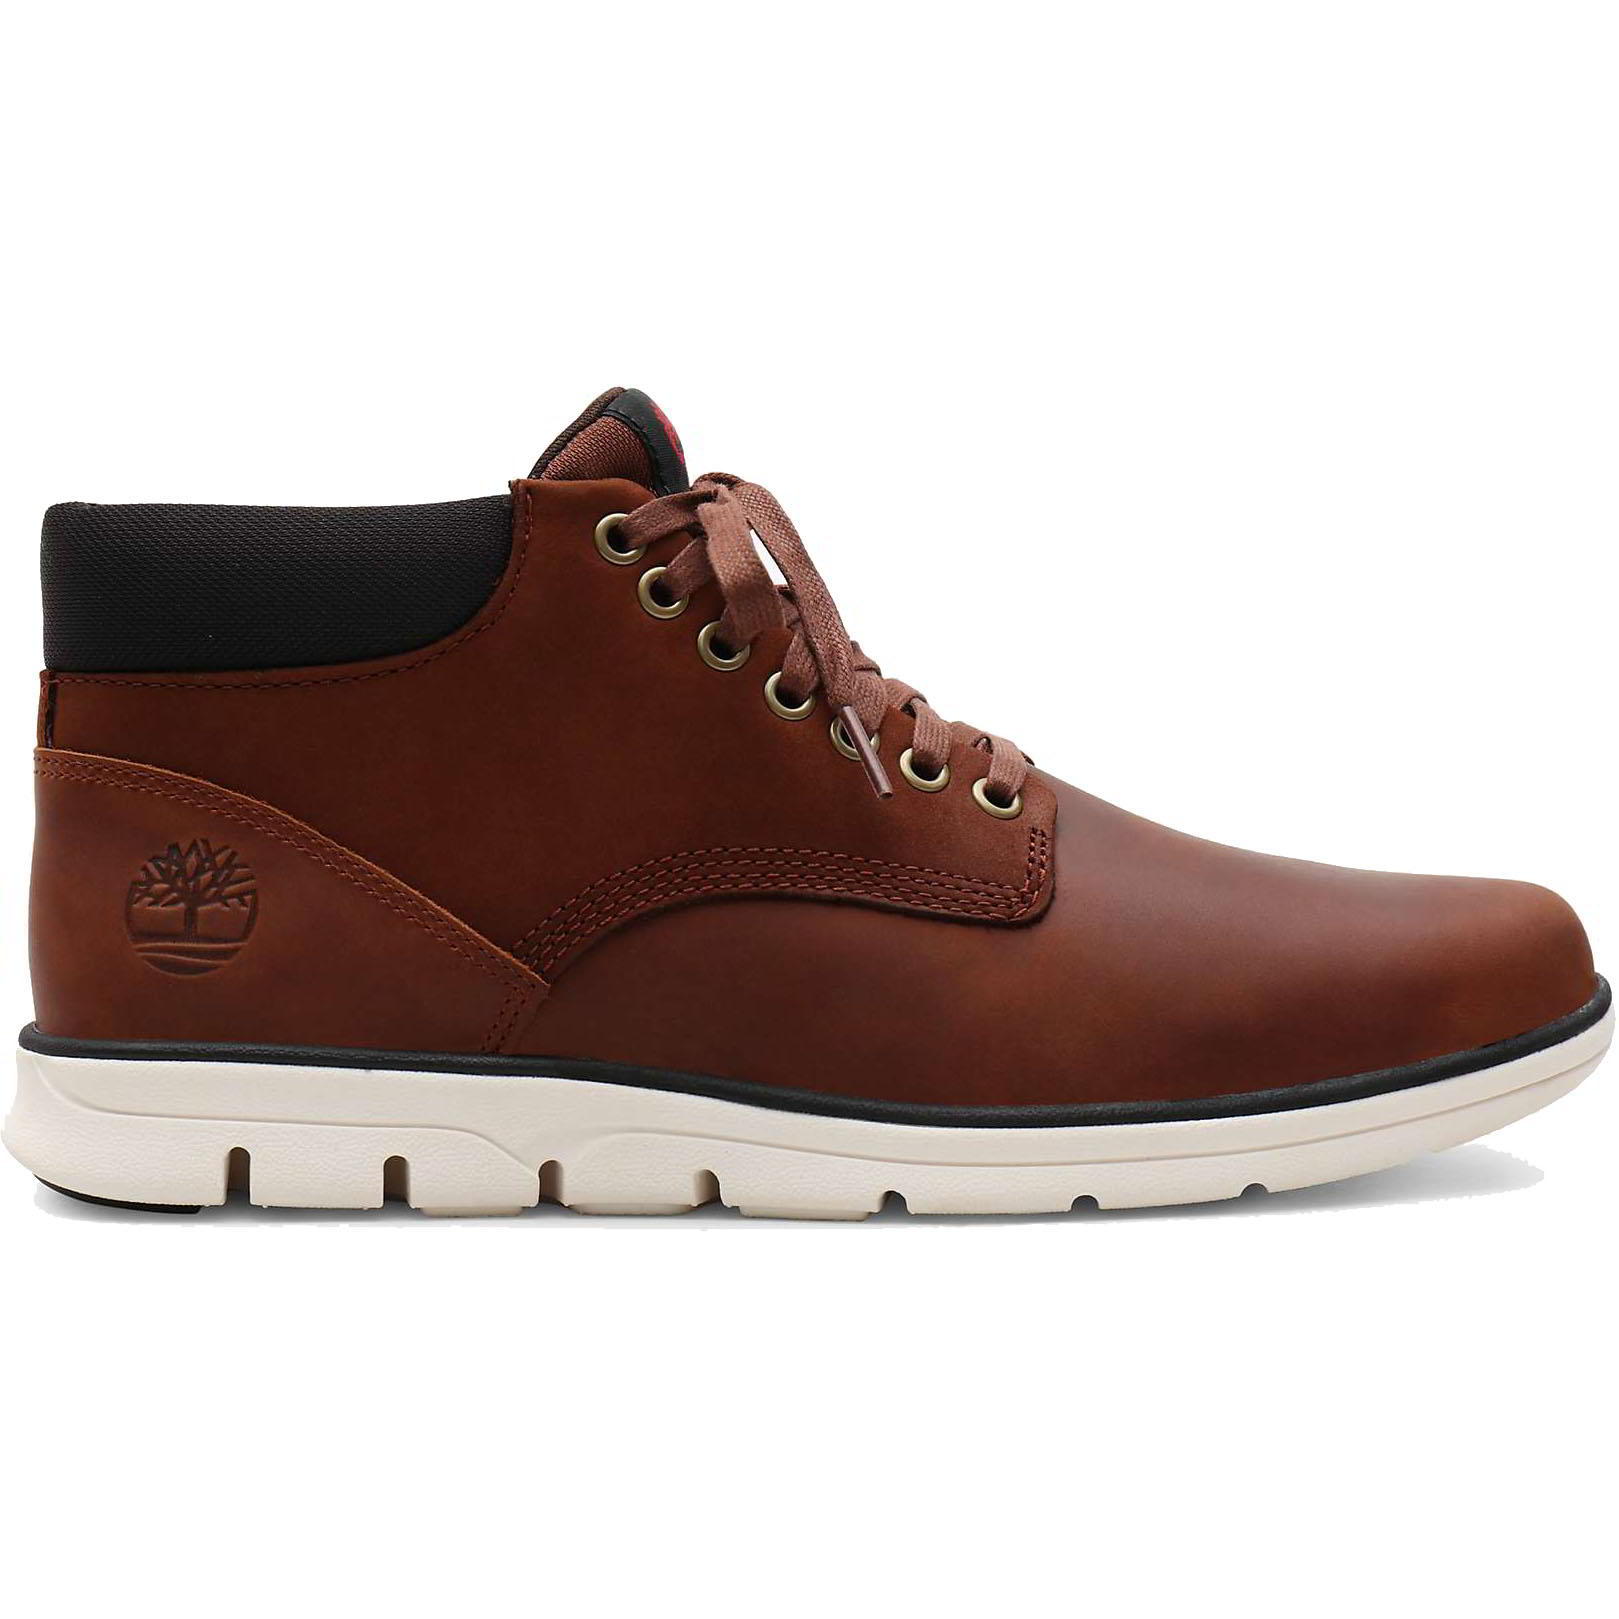 Timberland Men's Bradstreet Chukka Leather Ankle Boots - UK 11.5